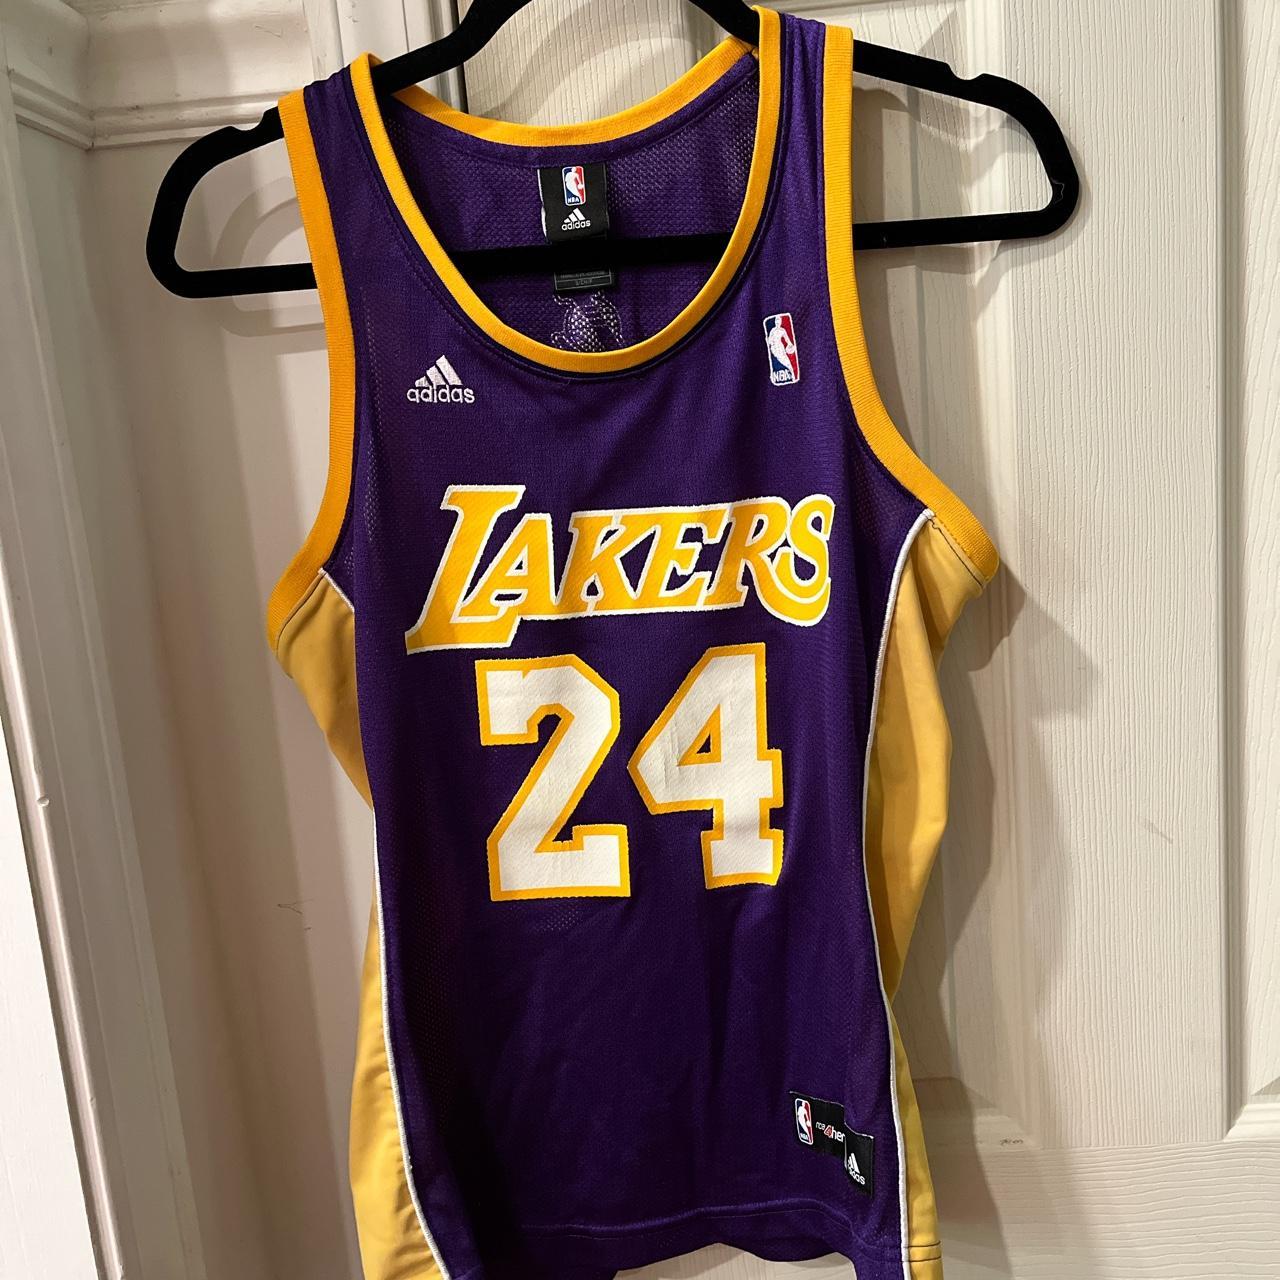 adidas Lakers youth jersey kobe bryant 24 size - Depop